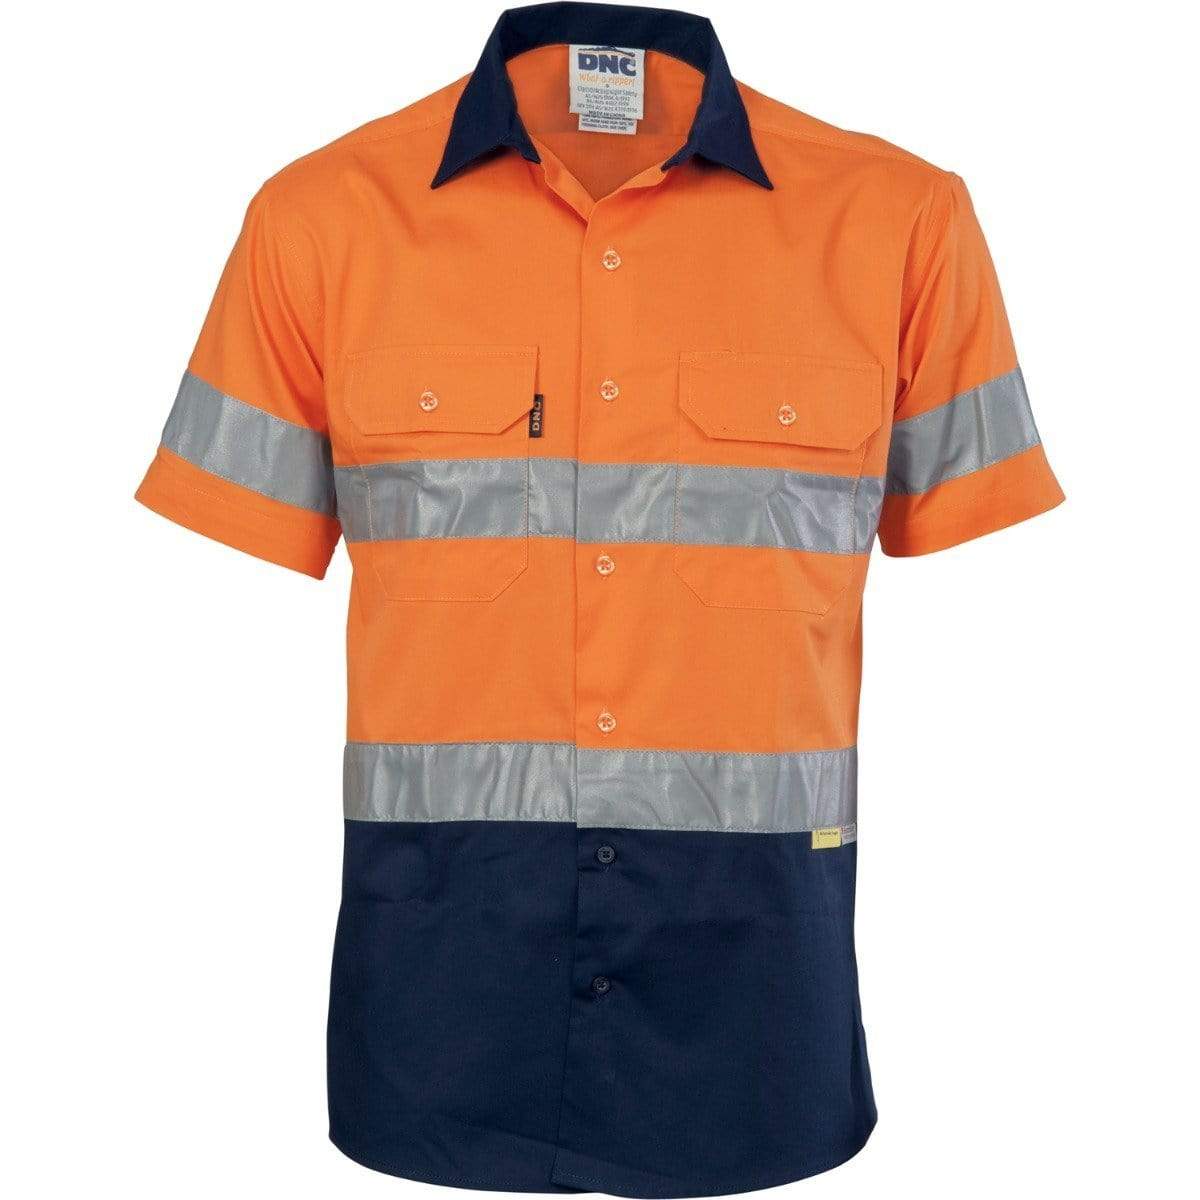 Dnc Workwear Hi-vis Cool-breeze Short Sleeve Cotton Shirt With 3m 8906 Reflective Tape - 3887 Work Wear DNC Workwear Orange/Navy S 